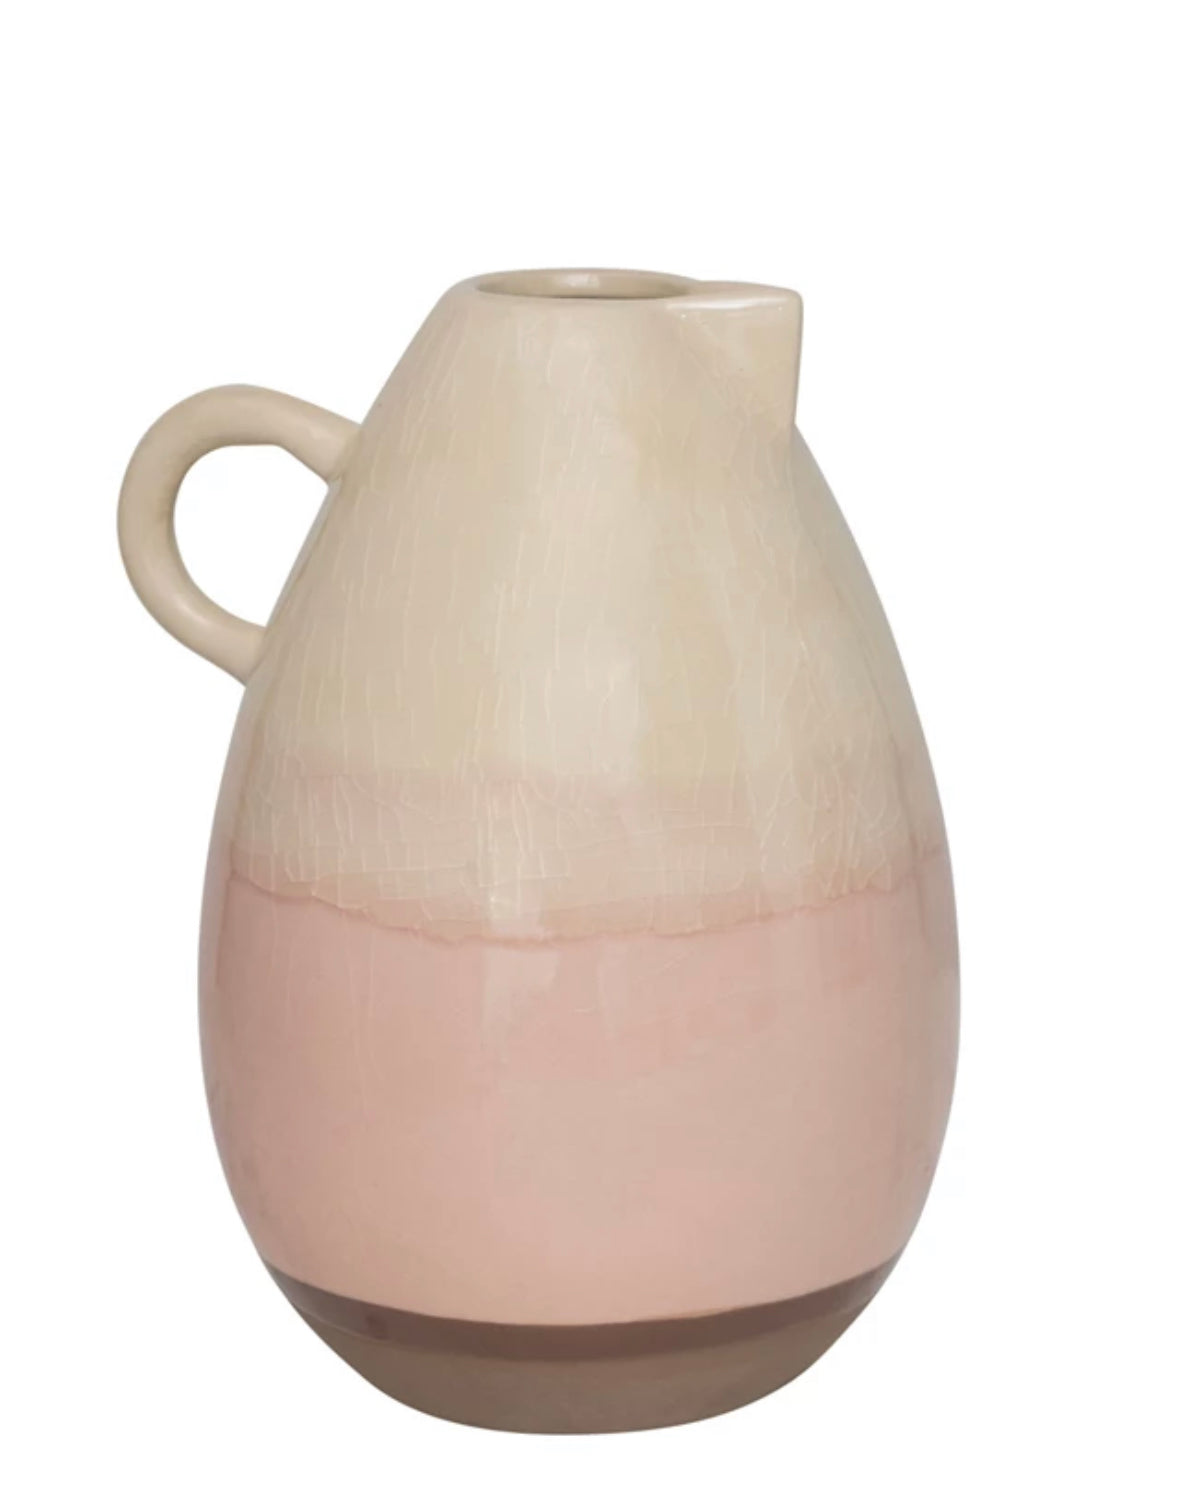 Decorative Ceramic Vase/Pitcher, Reactive Crackle Glaze